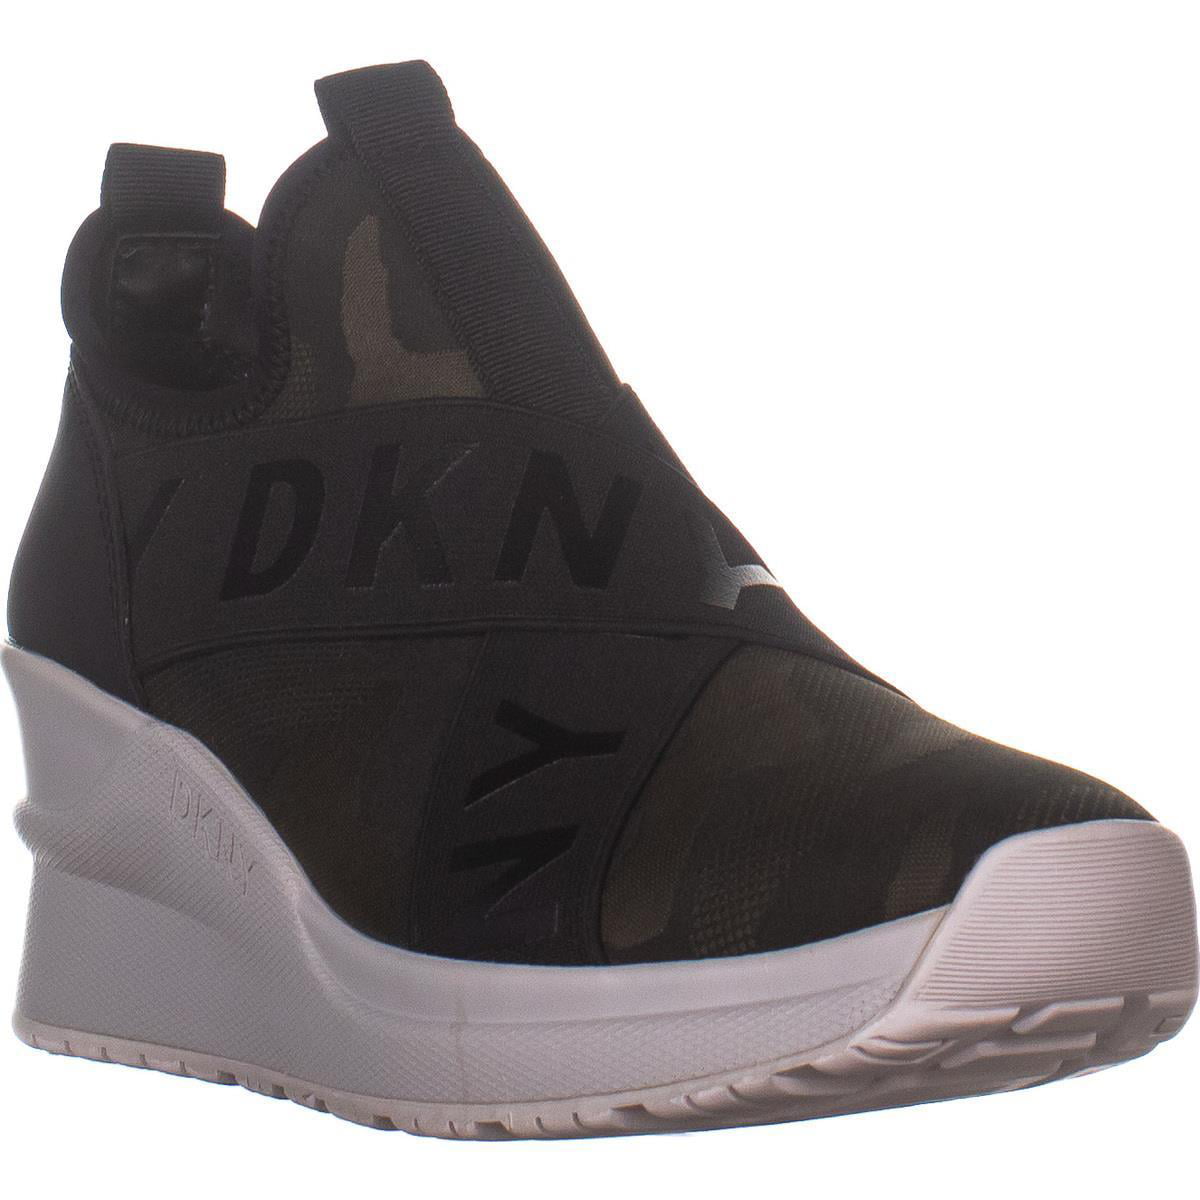 dkny camo wedge sneakers